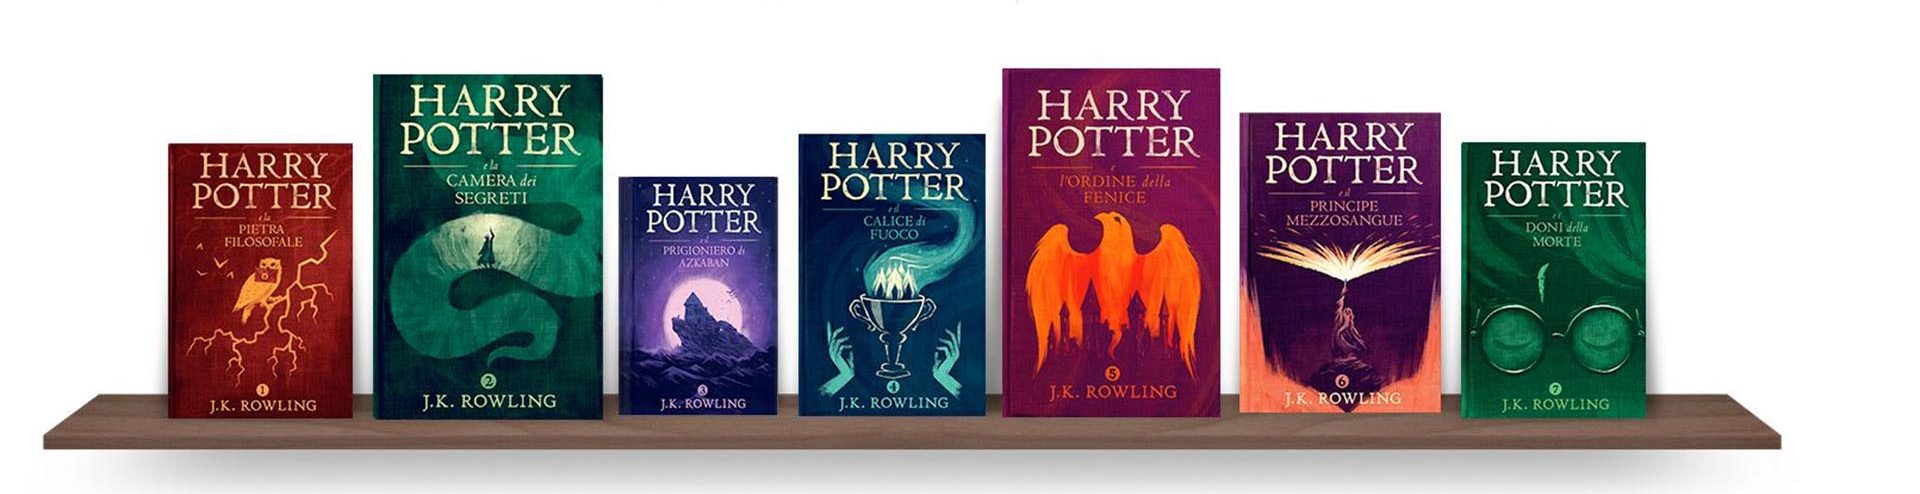 Harry Potter libri gratis per due mesi: ecco come ottenerli thumbnail